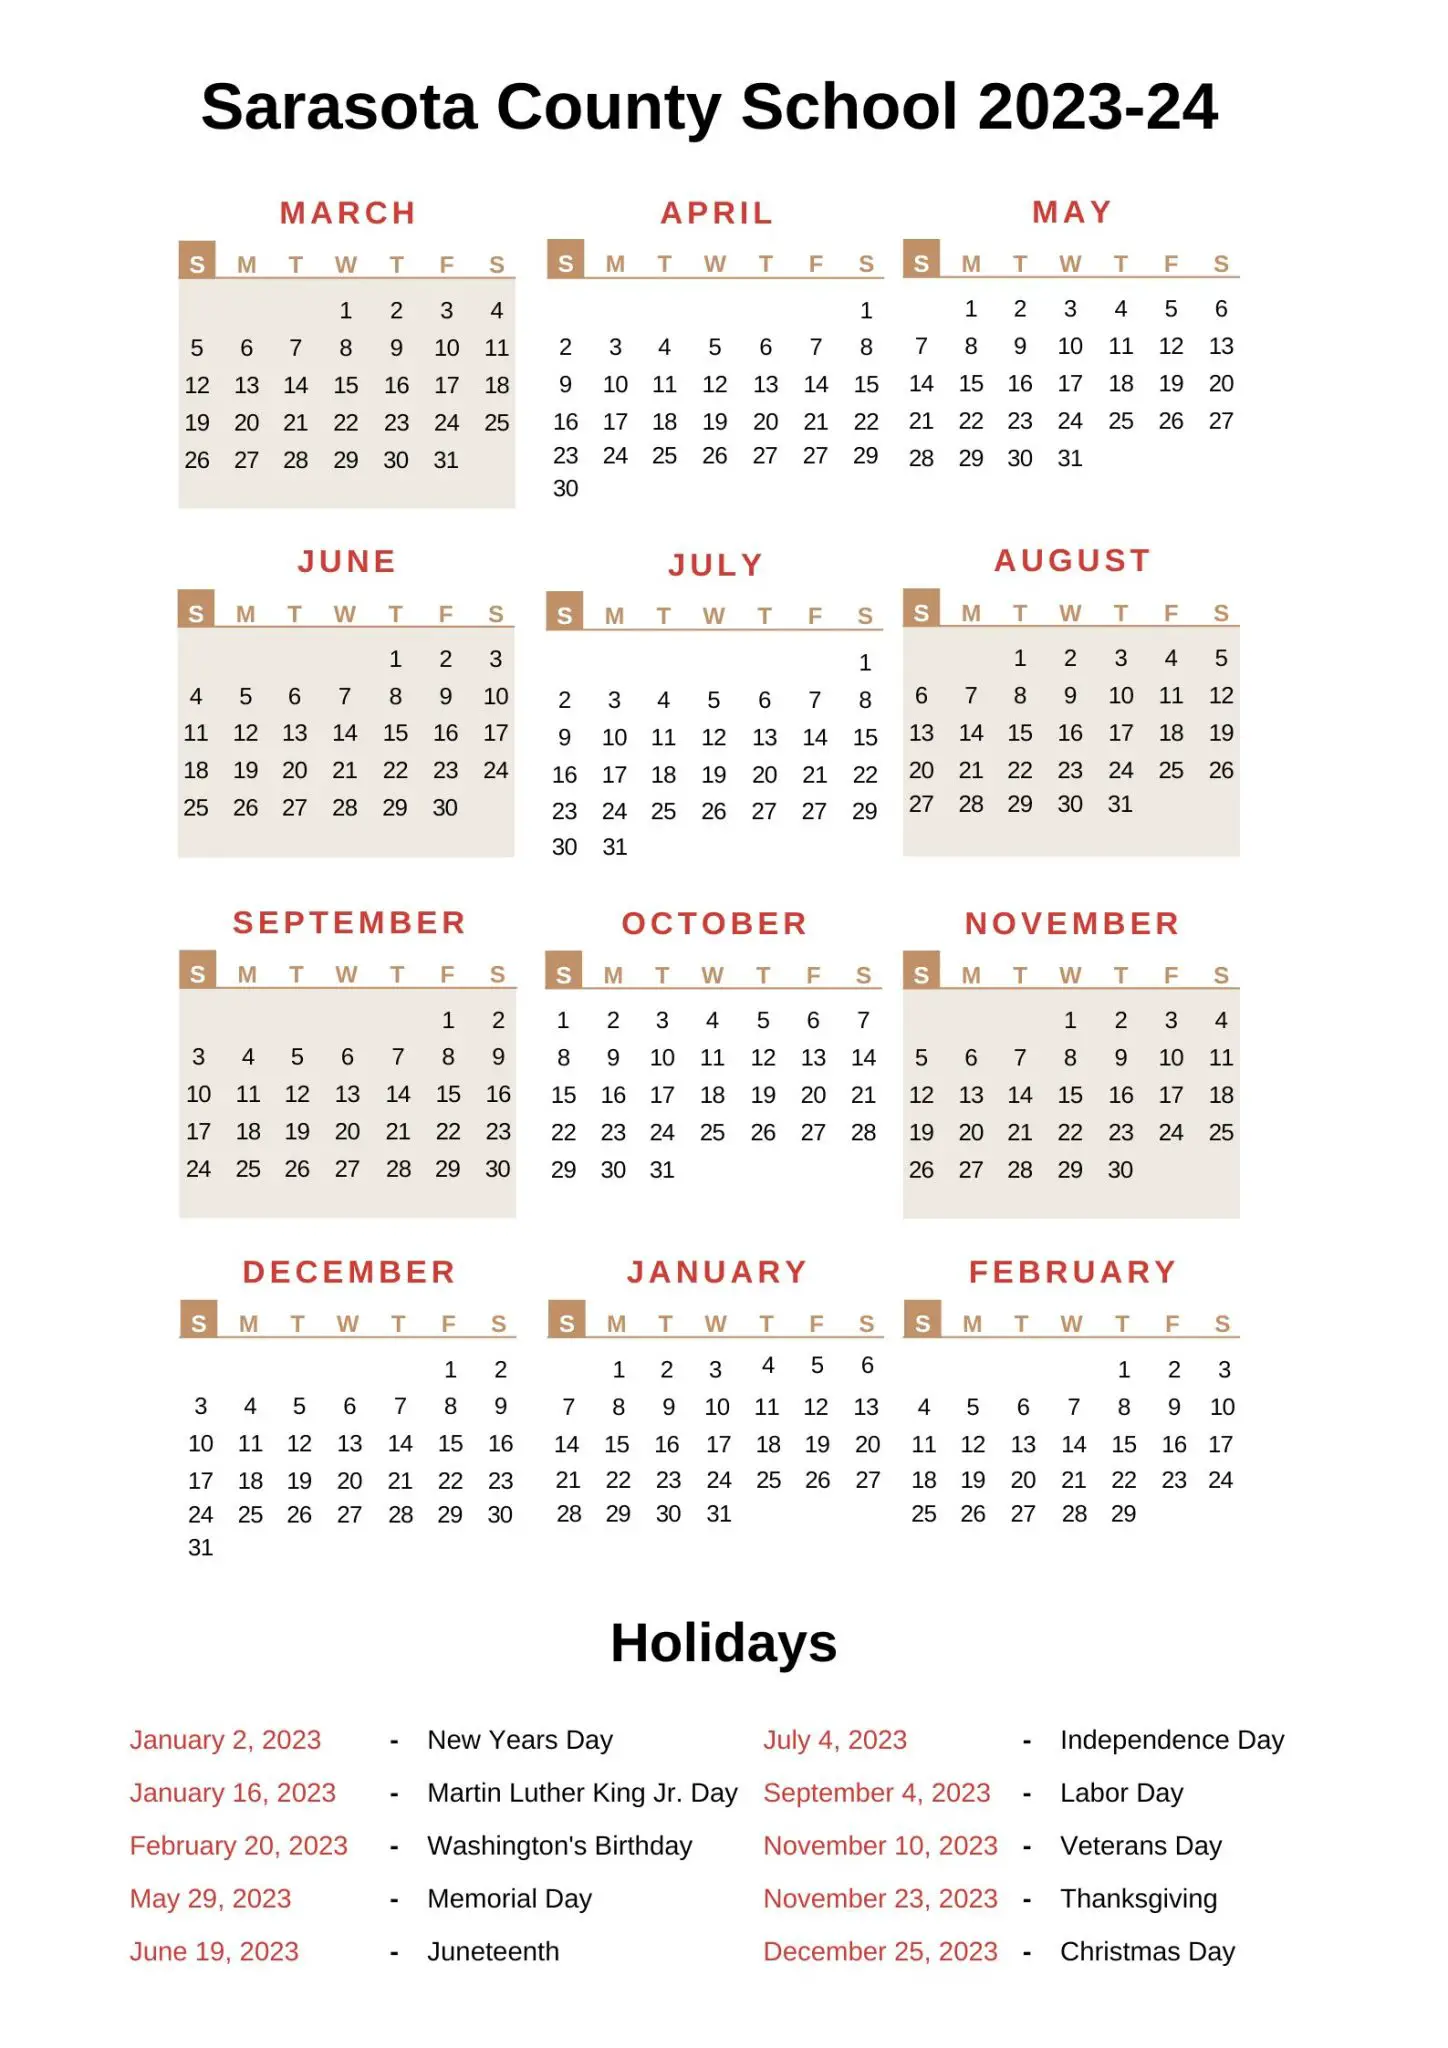 sarasota-county-schools-calendar-2023-24-with-holidays